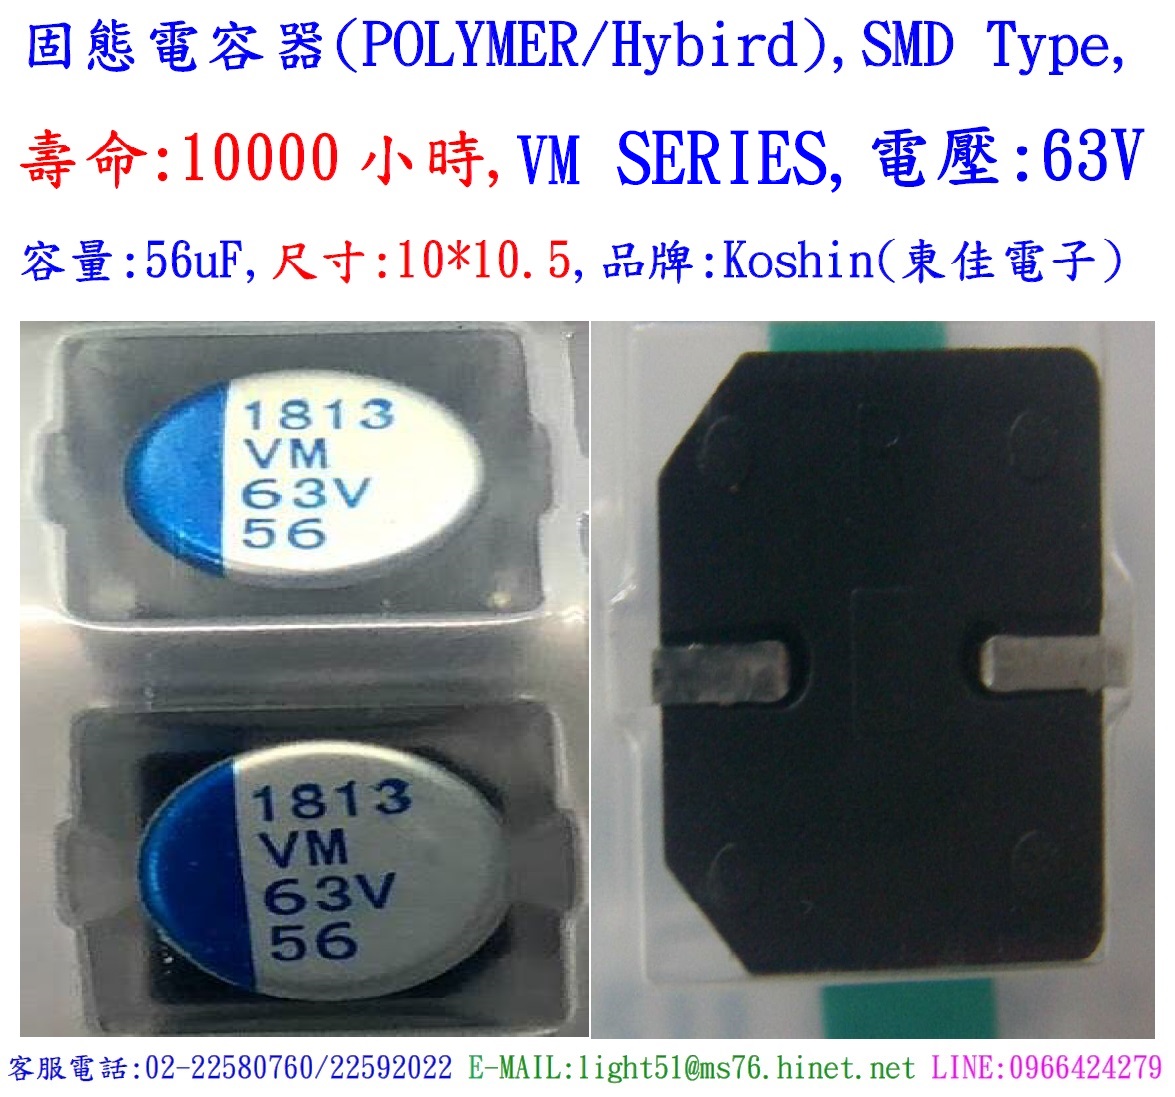 VM,63V,56uF,尺寸:10X10.5固態電容器(Hybird/POLYMER),壽命10000小時,KOSHIN(東佳)